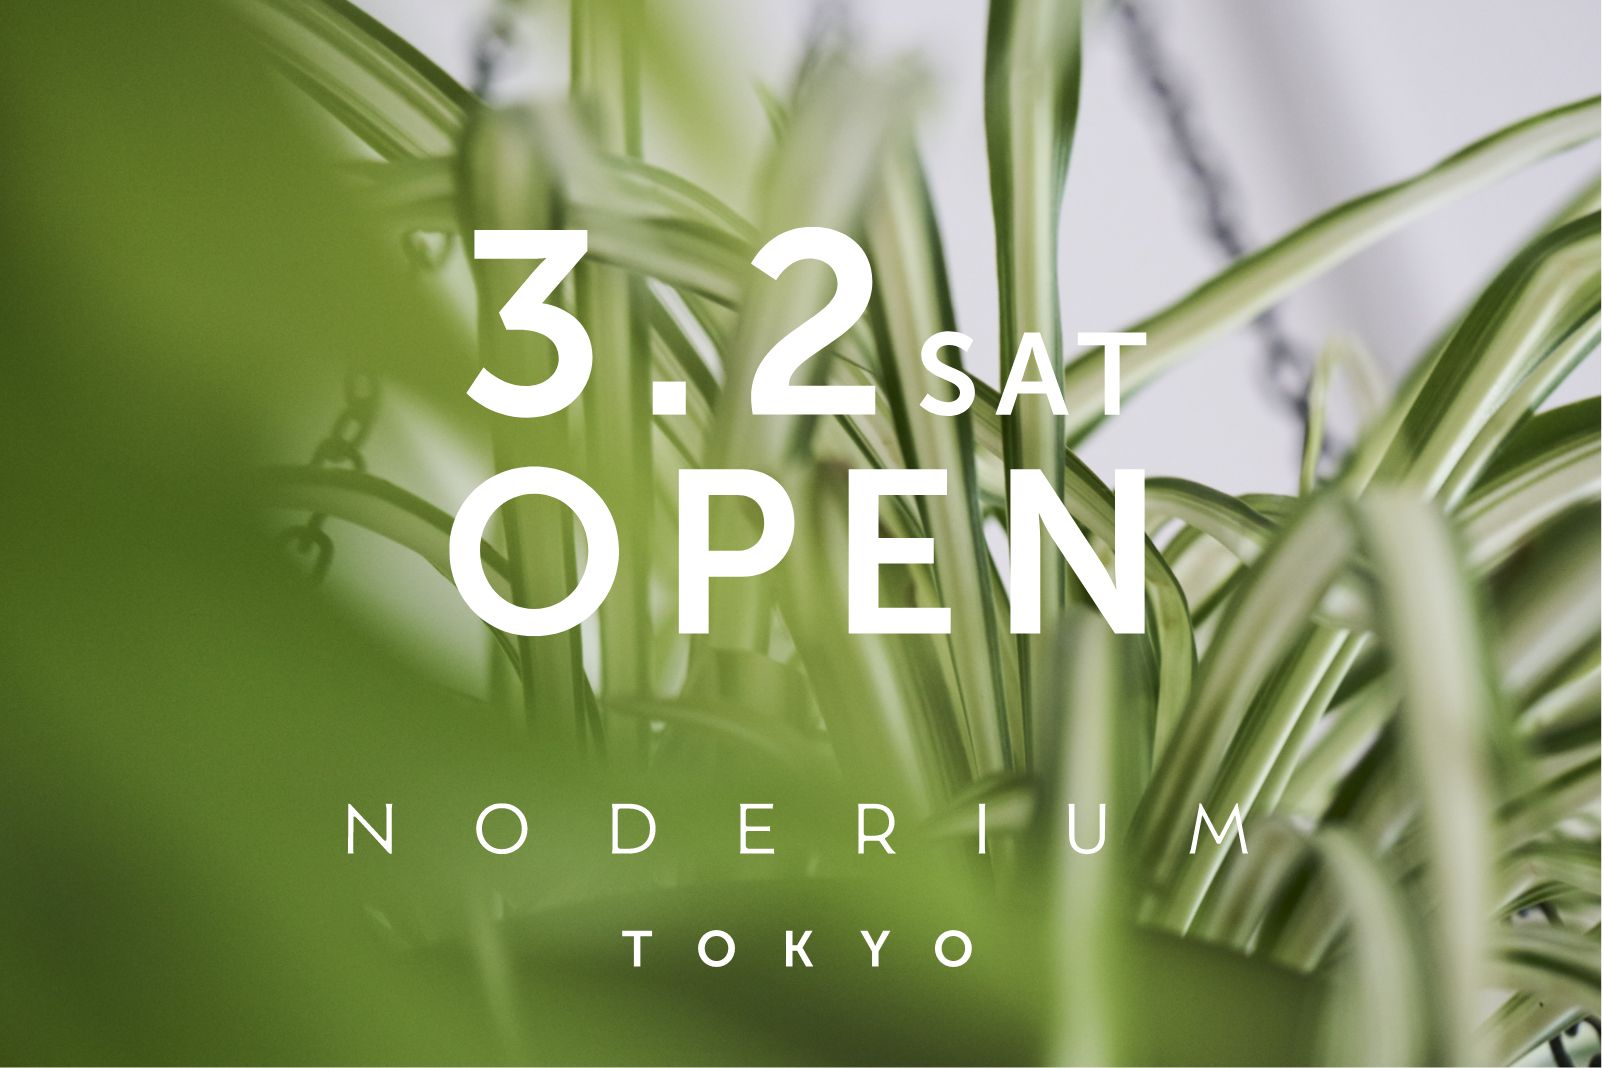 3.2 SAT OPEN NODERIUM TOKYO